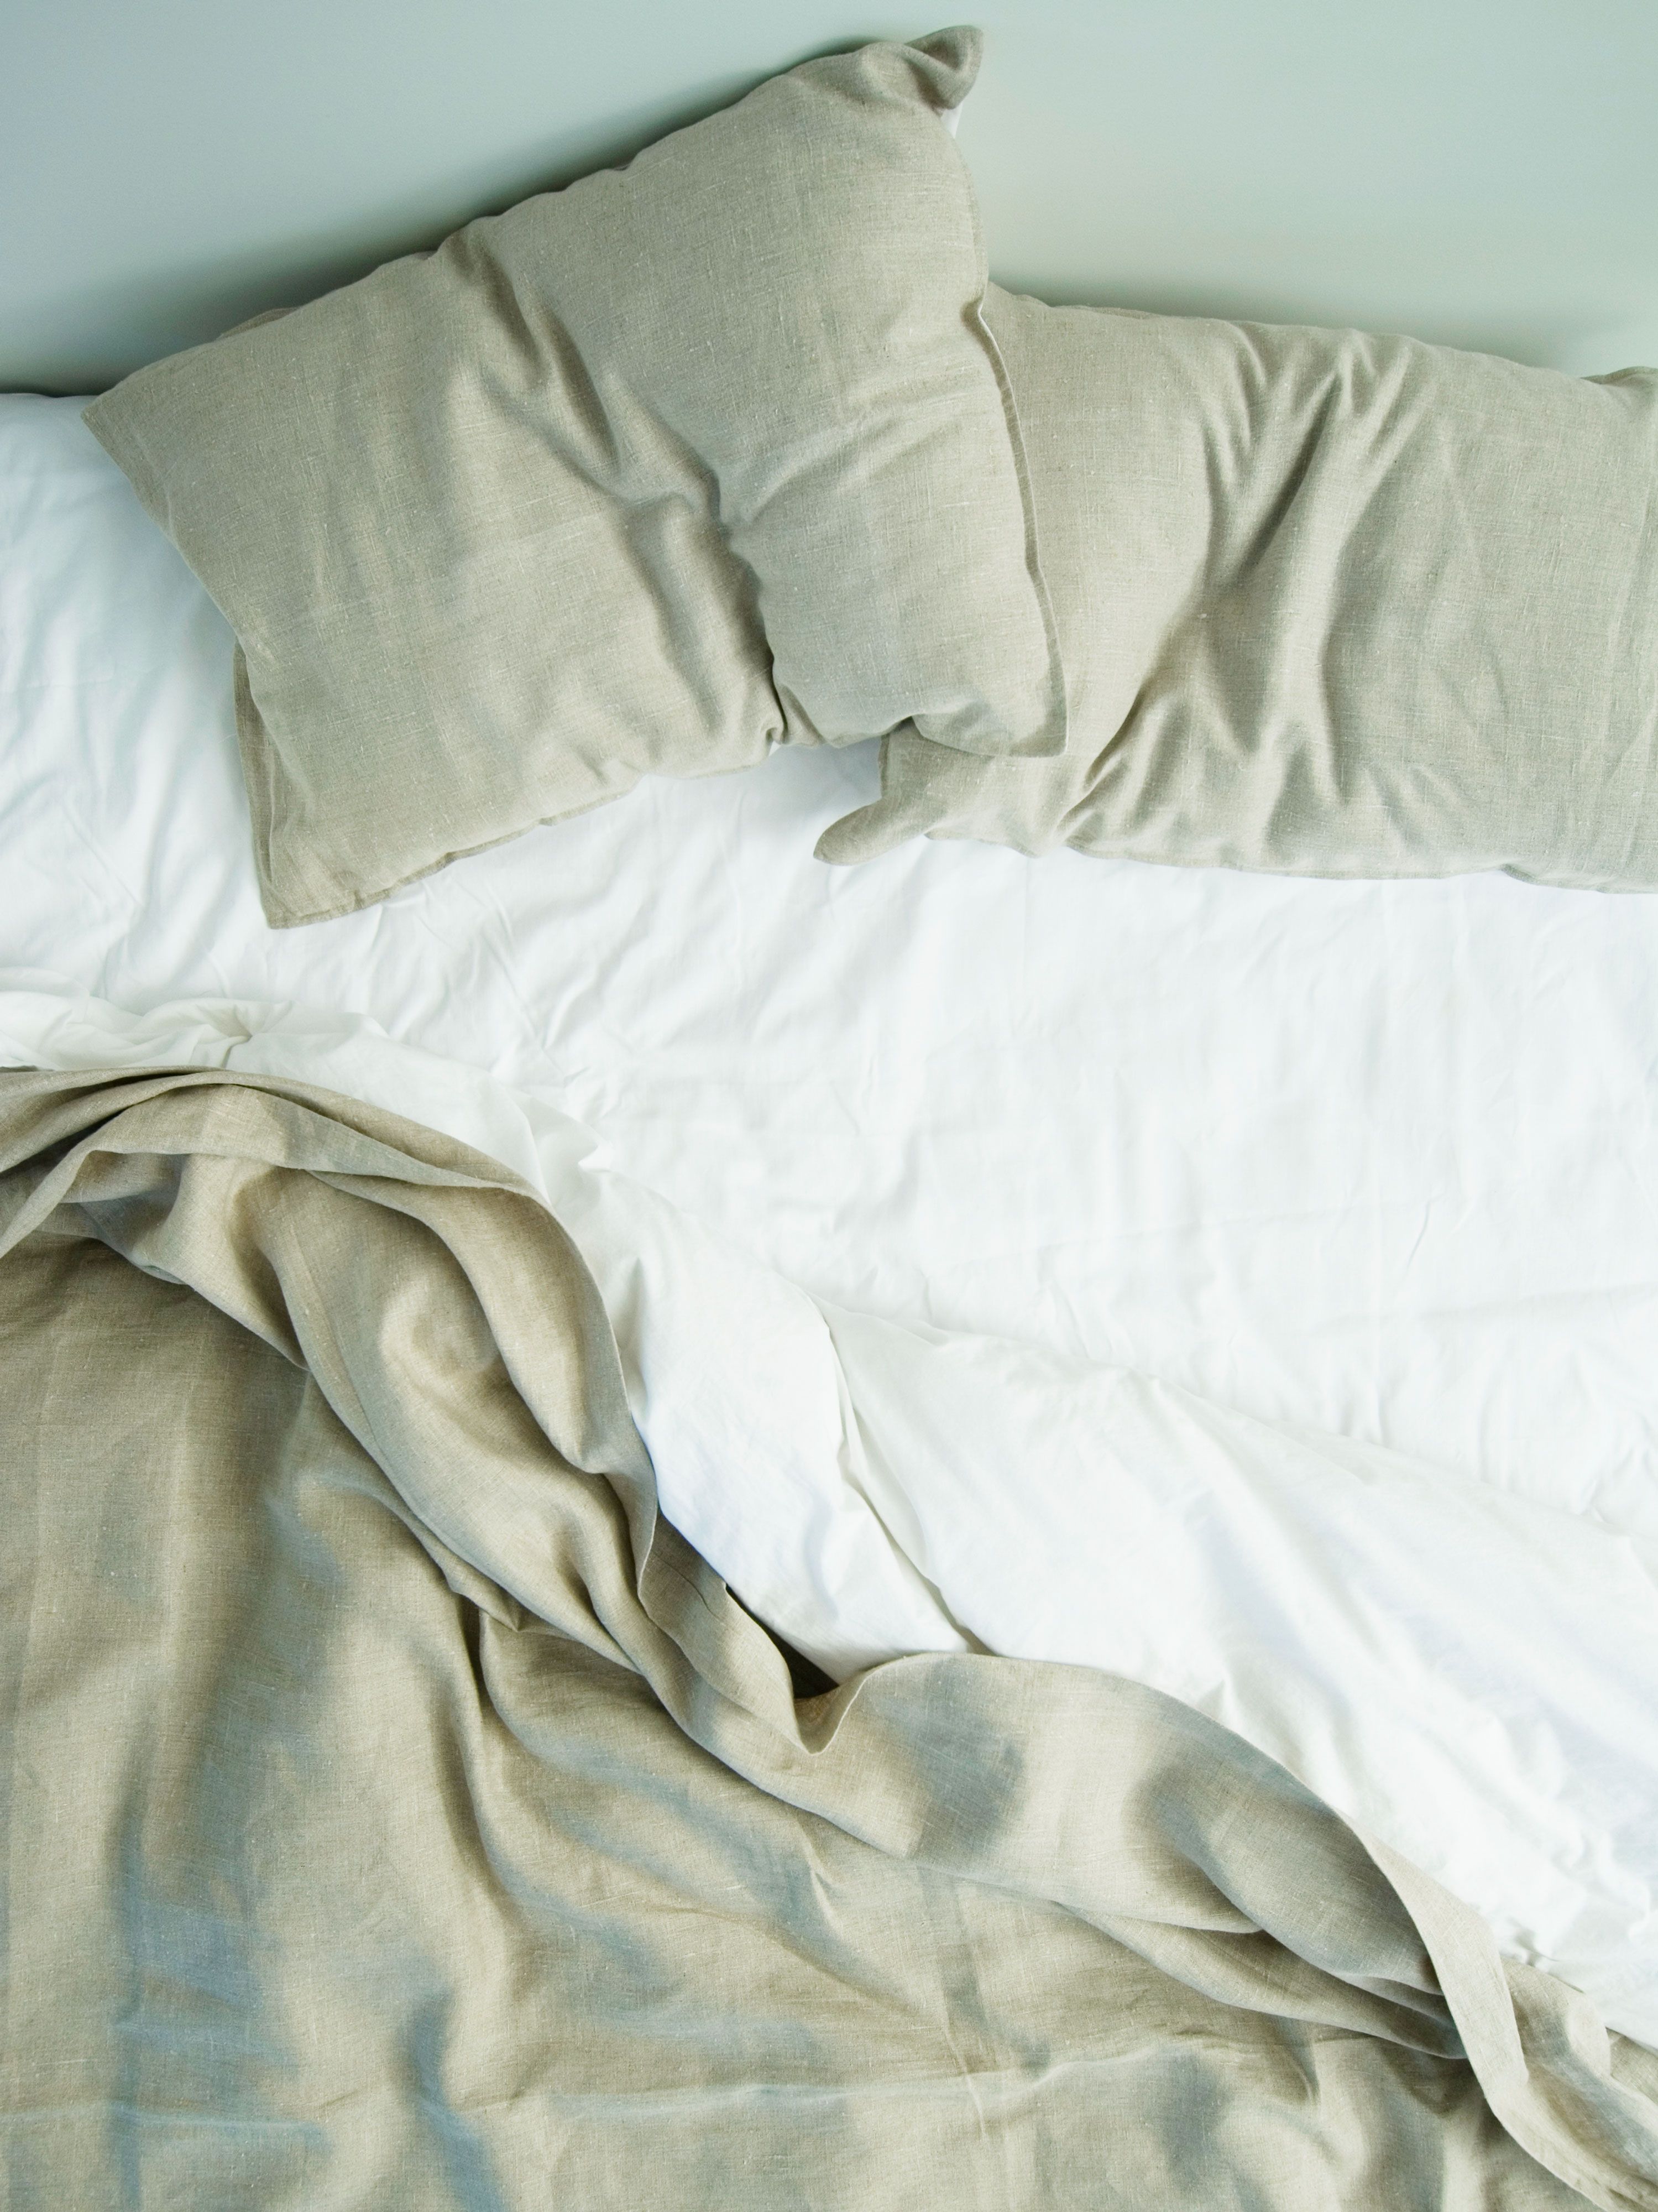 should you wash pillows